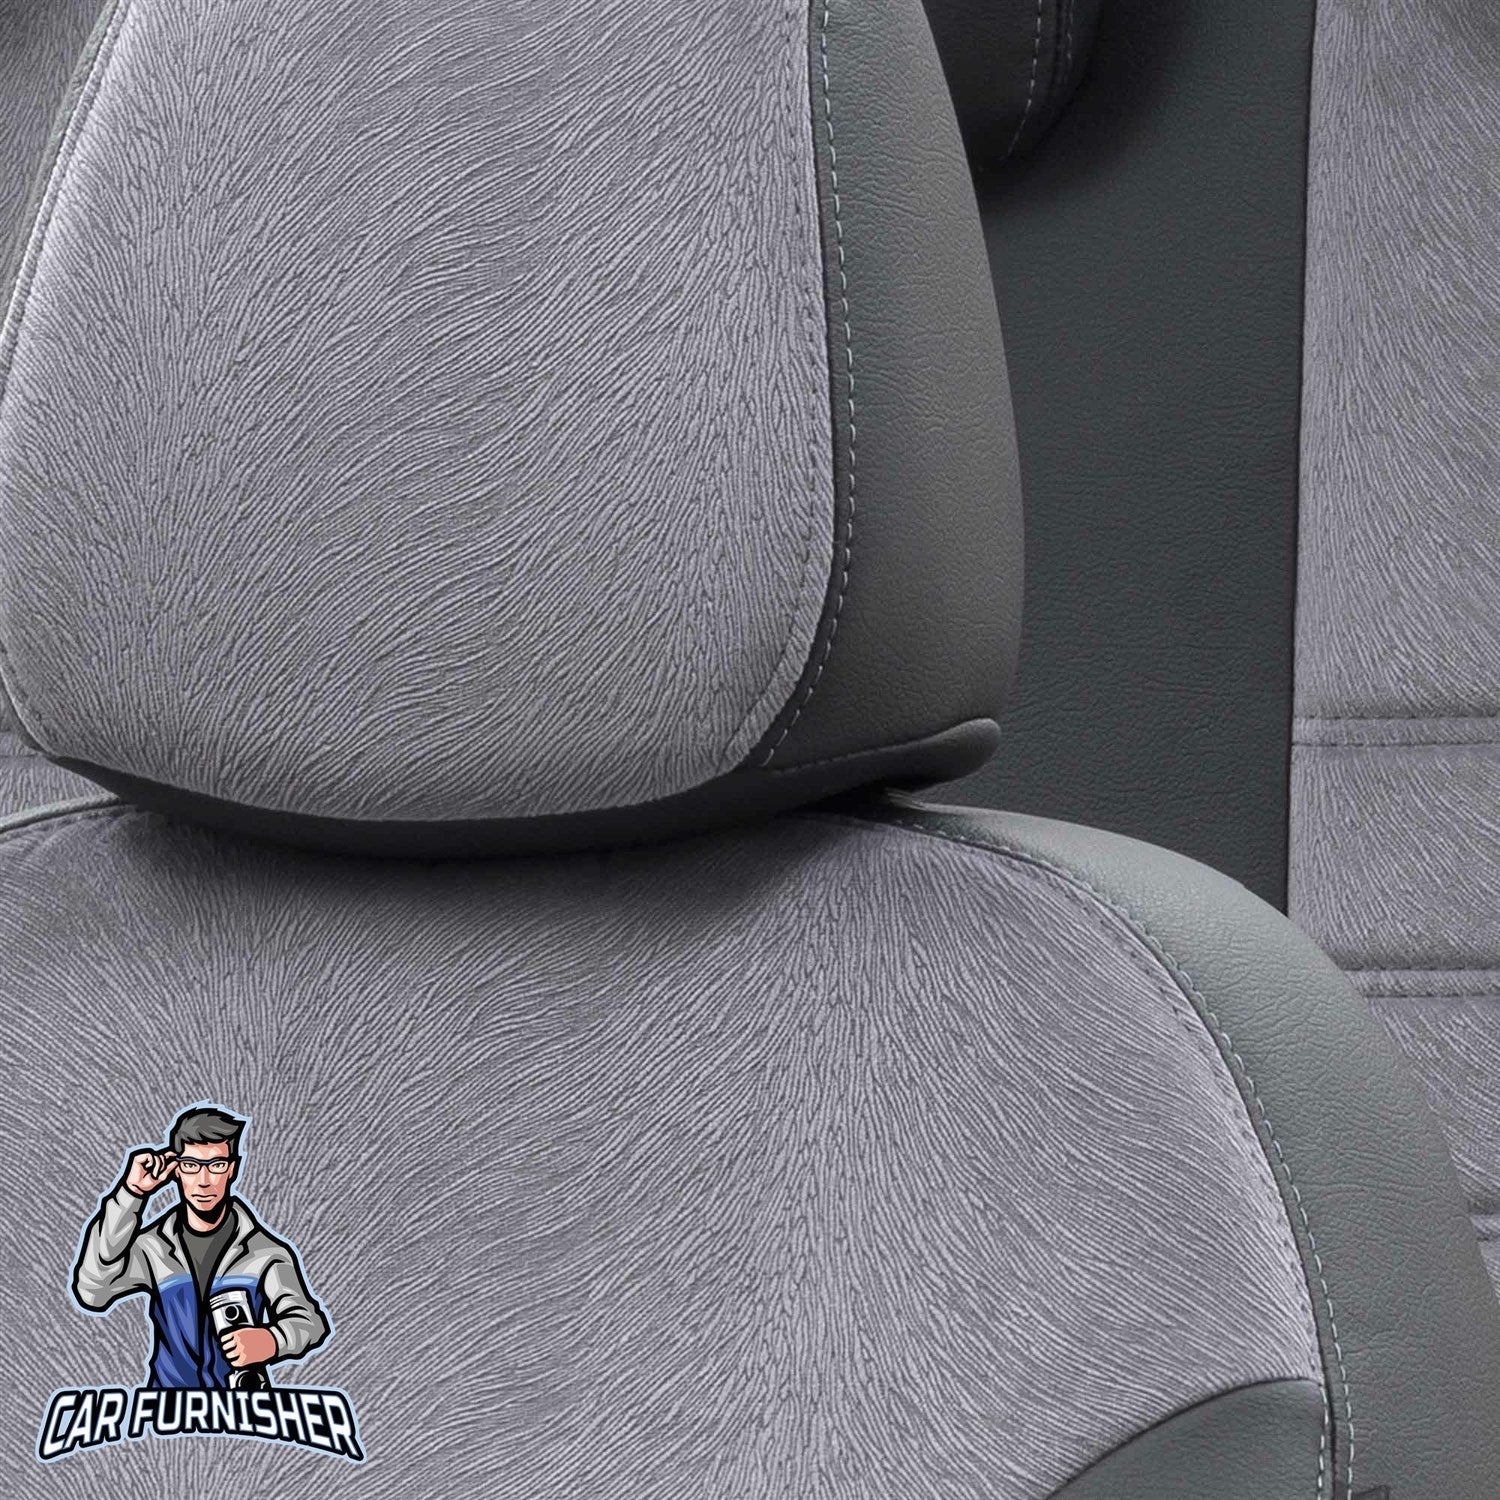 Kia Venga Seat Cover London Foal Feather Design Smoked Black Leather & Foal Feather